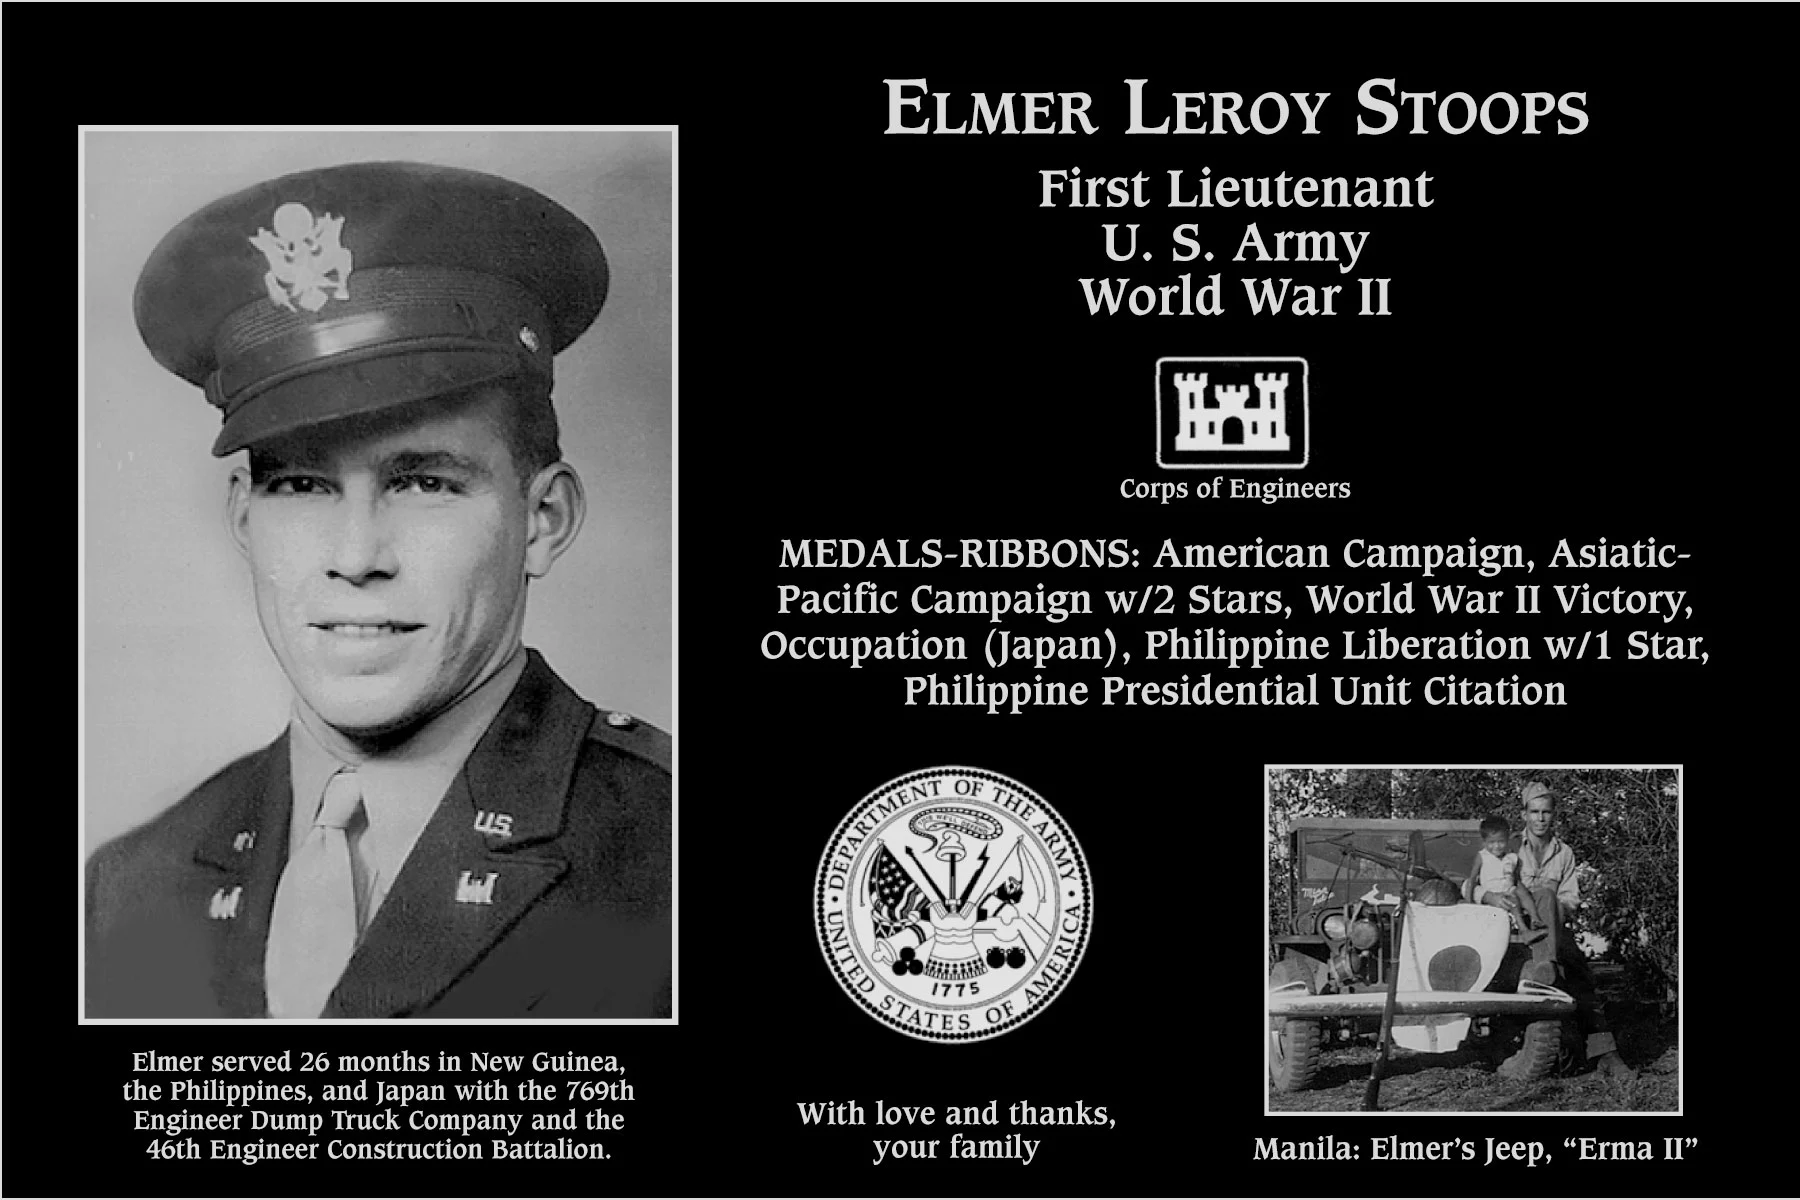 Elmer Leroy Stoops